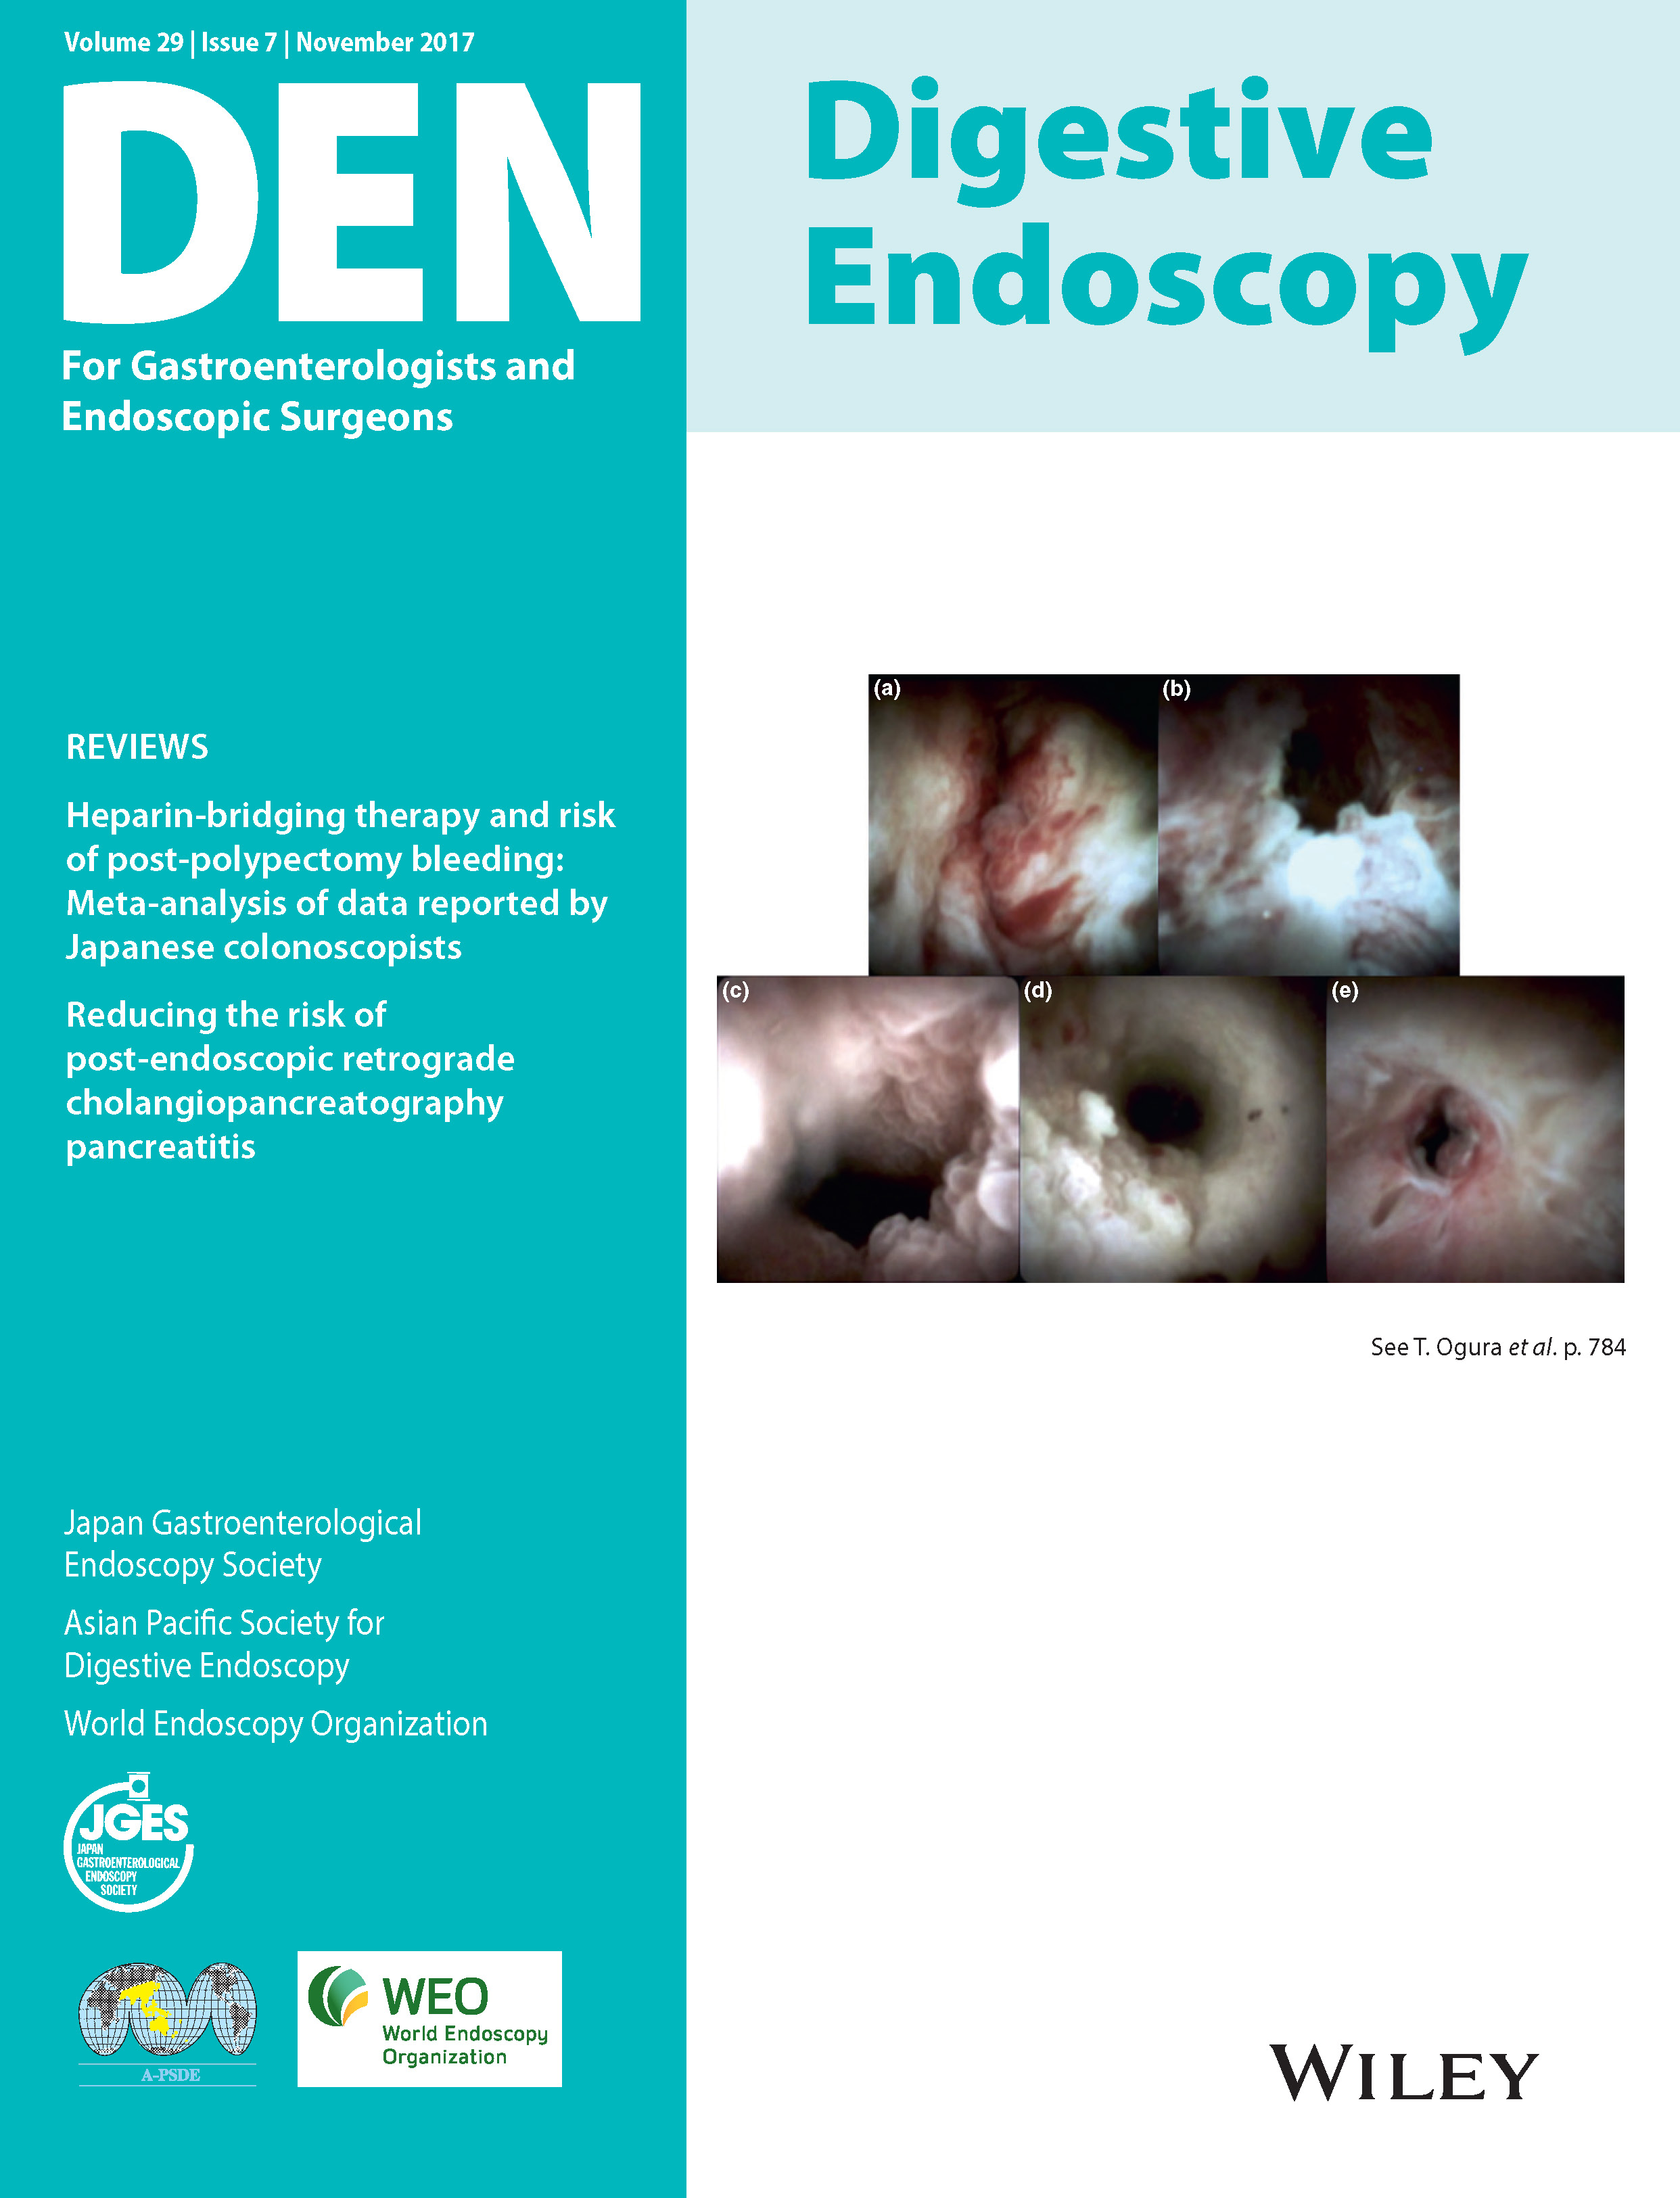 Digestive Endoscopy Vol29-7